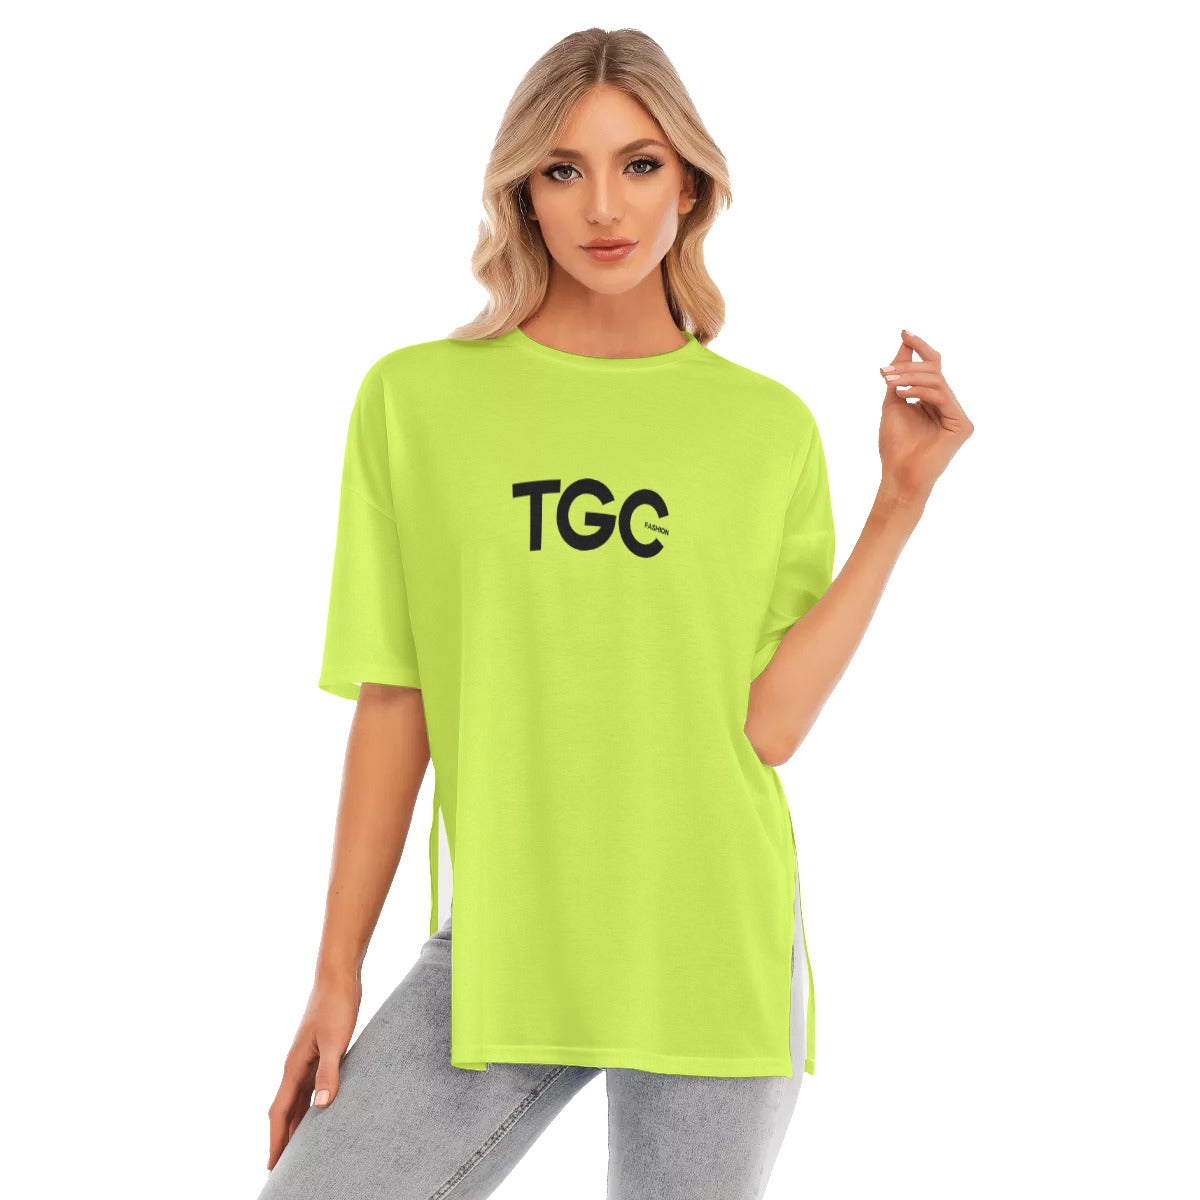 TGC Fashion official T-shirt